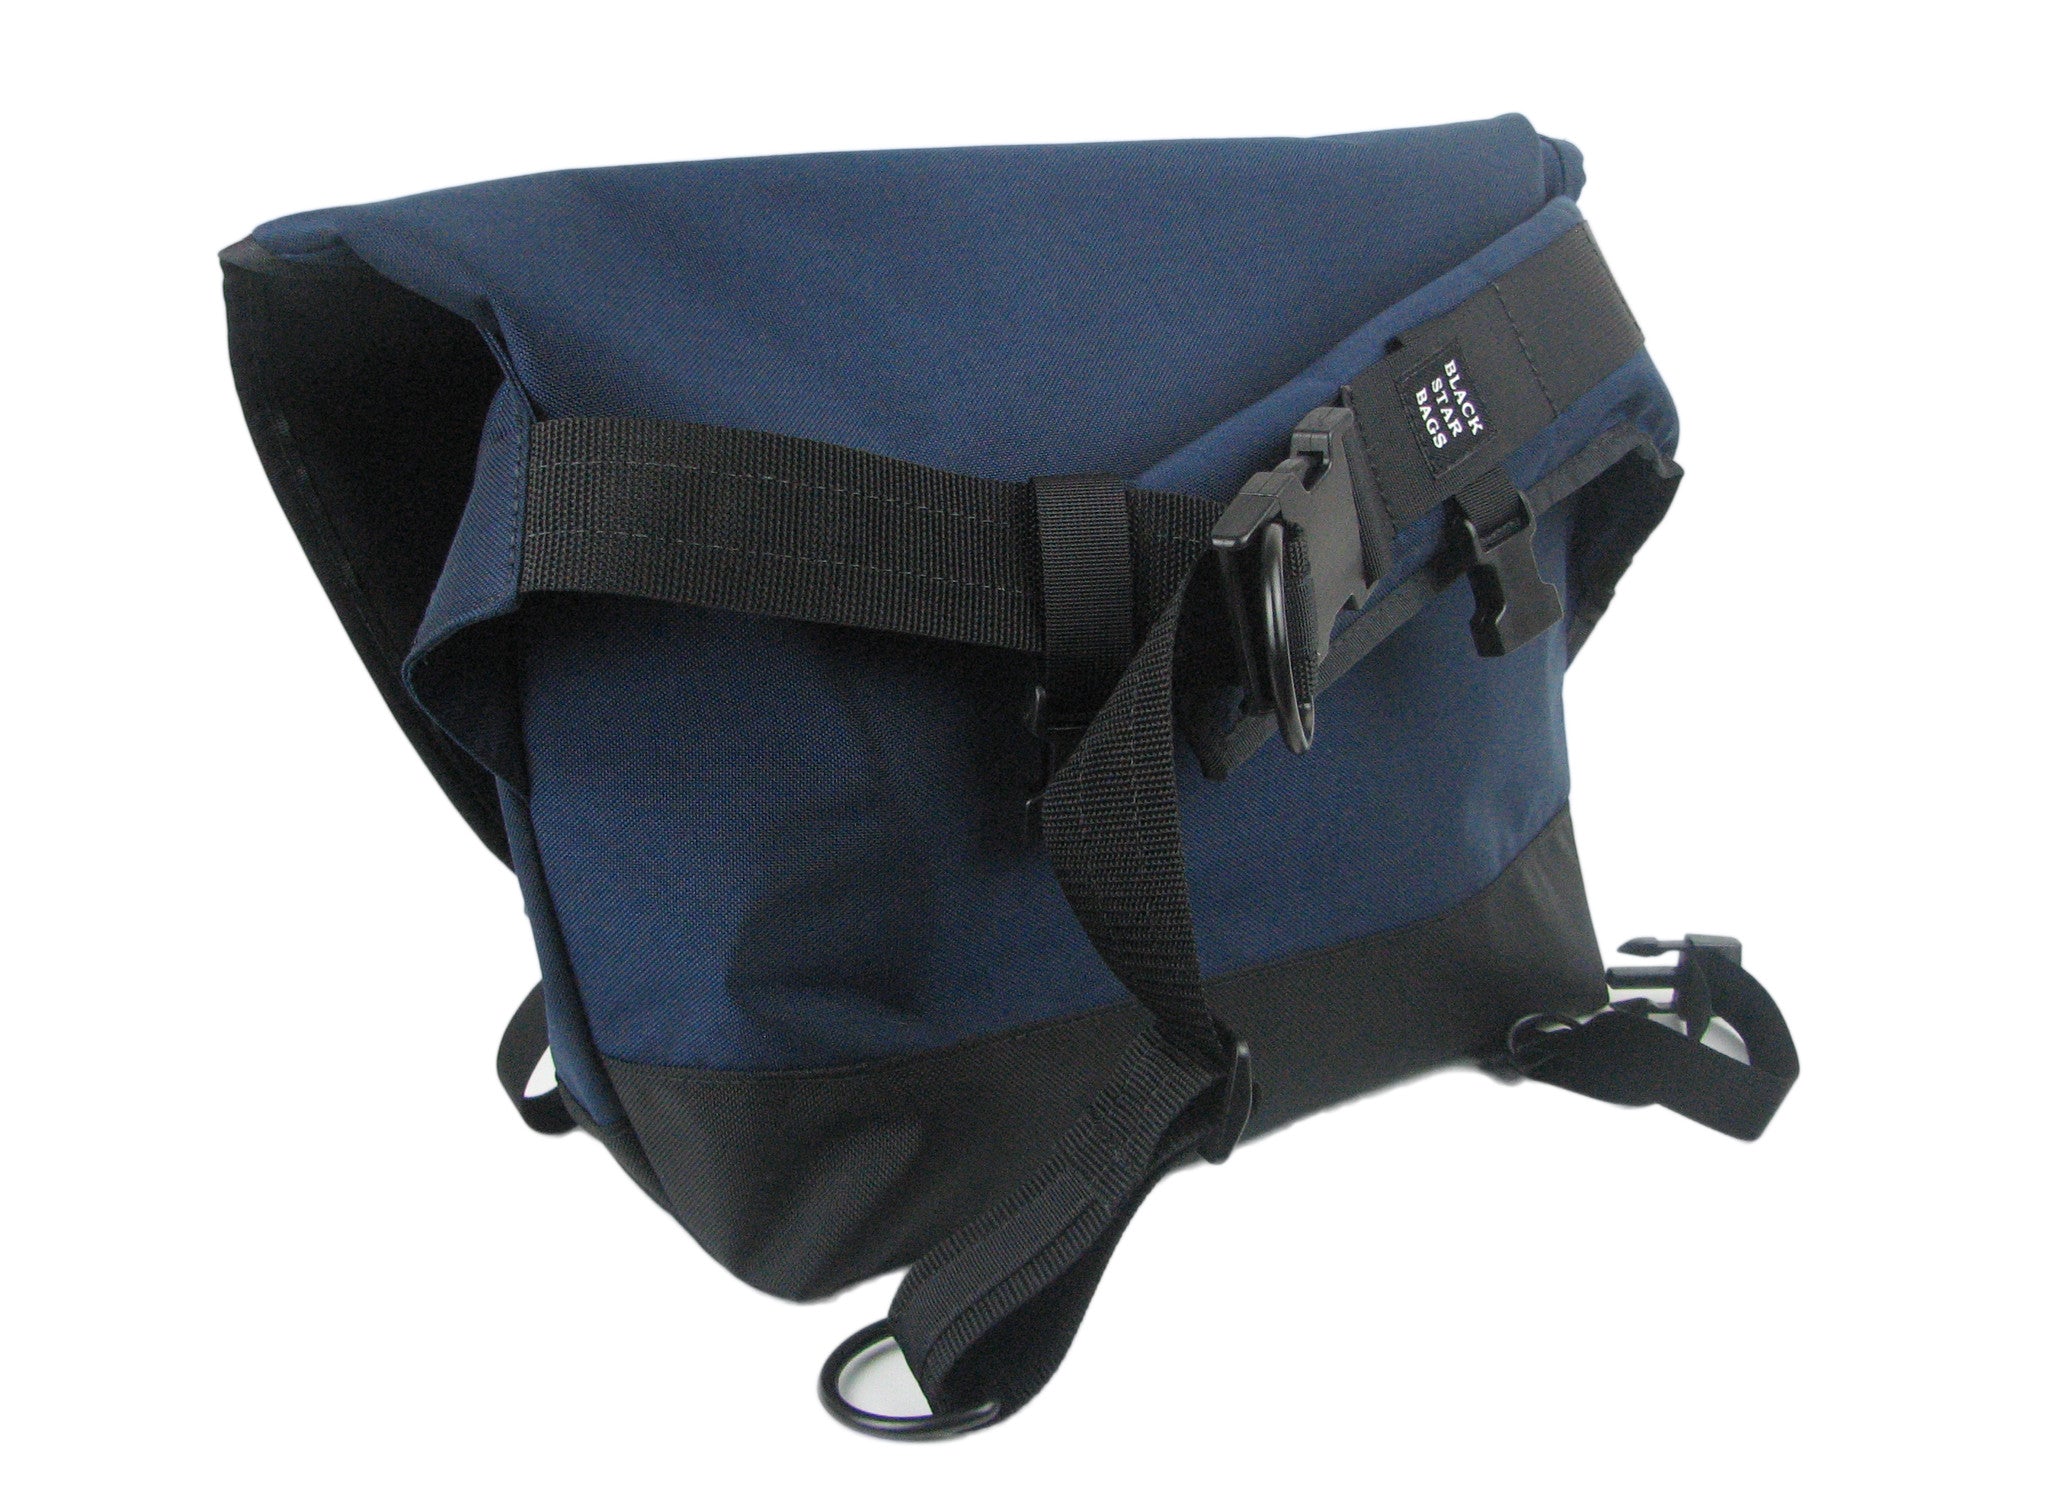 Interceptor Medium Waterproof Messenger Bag Review